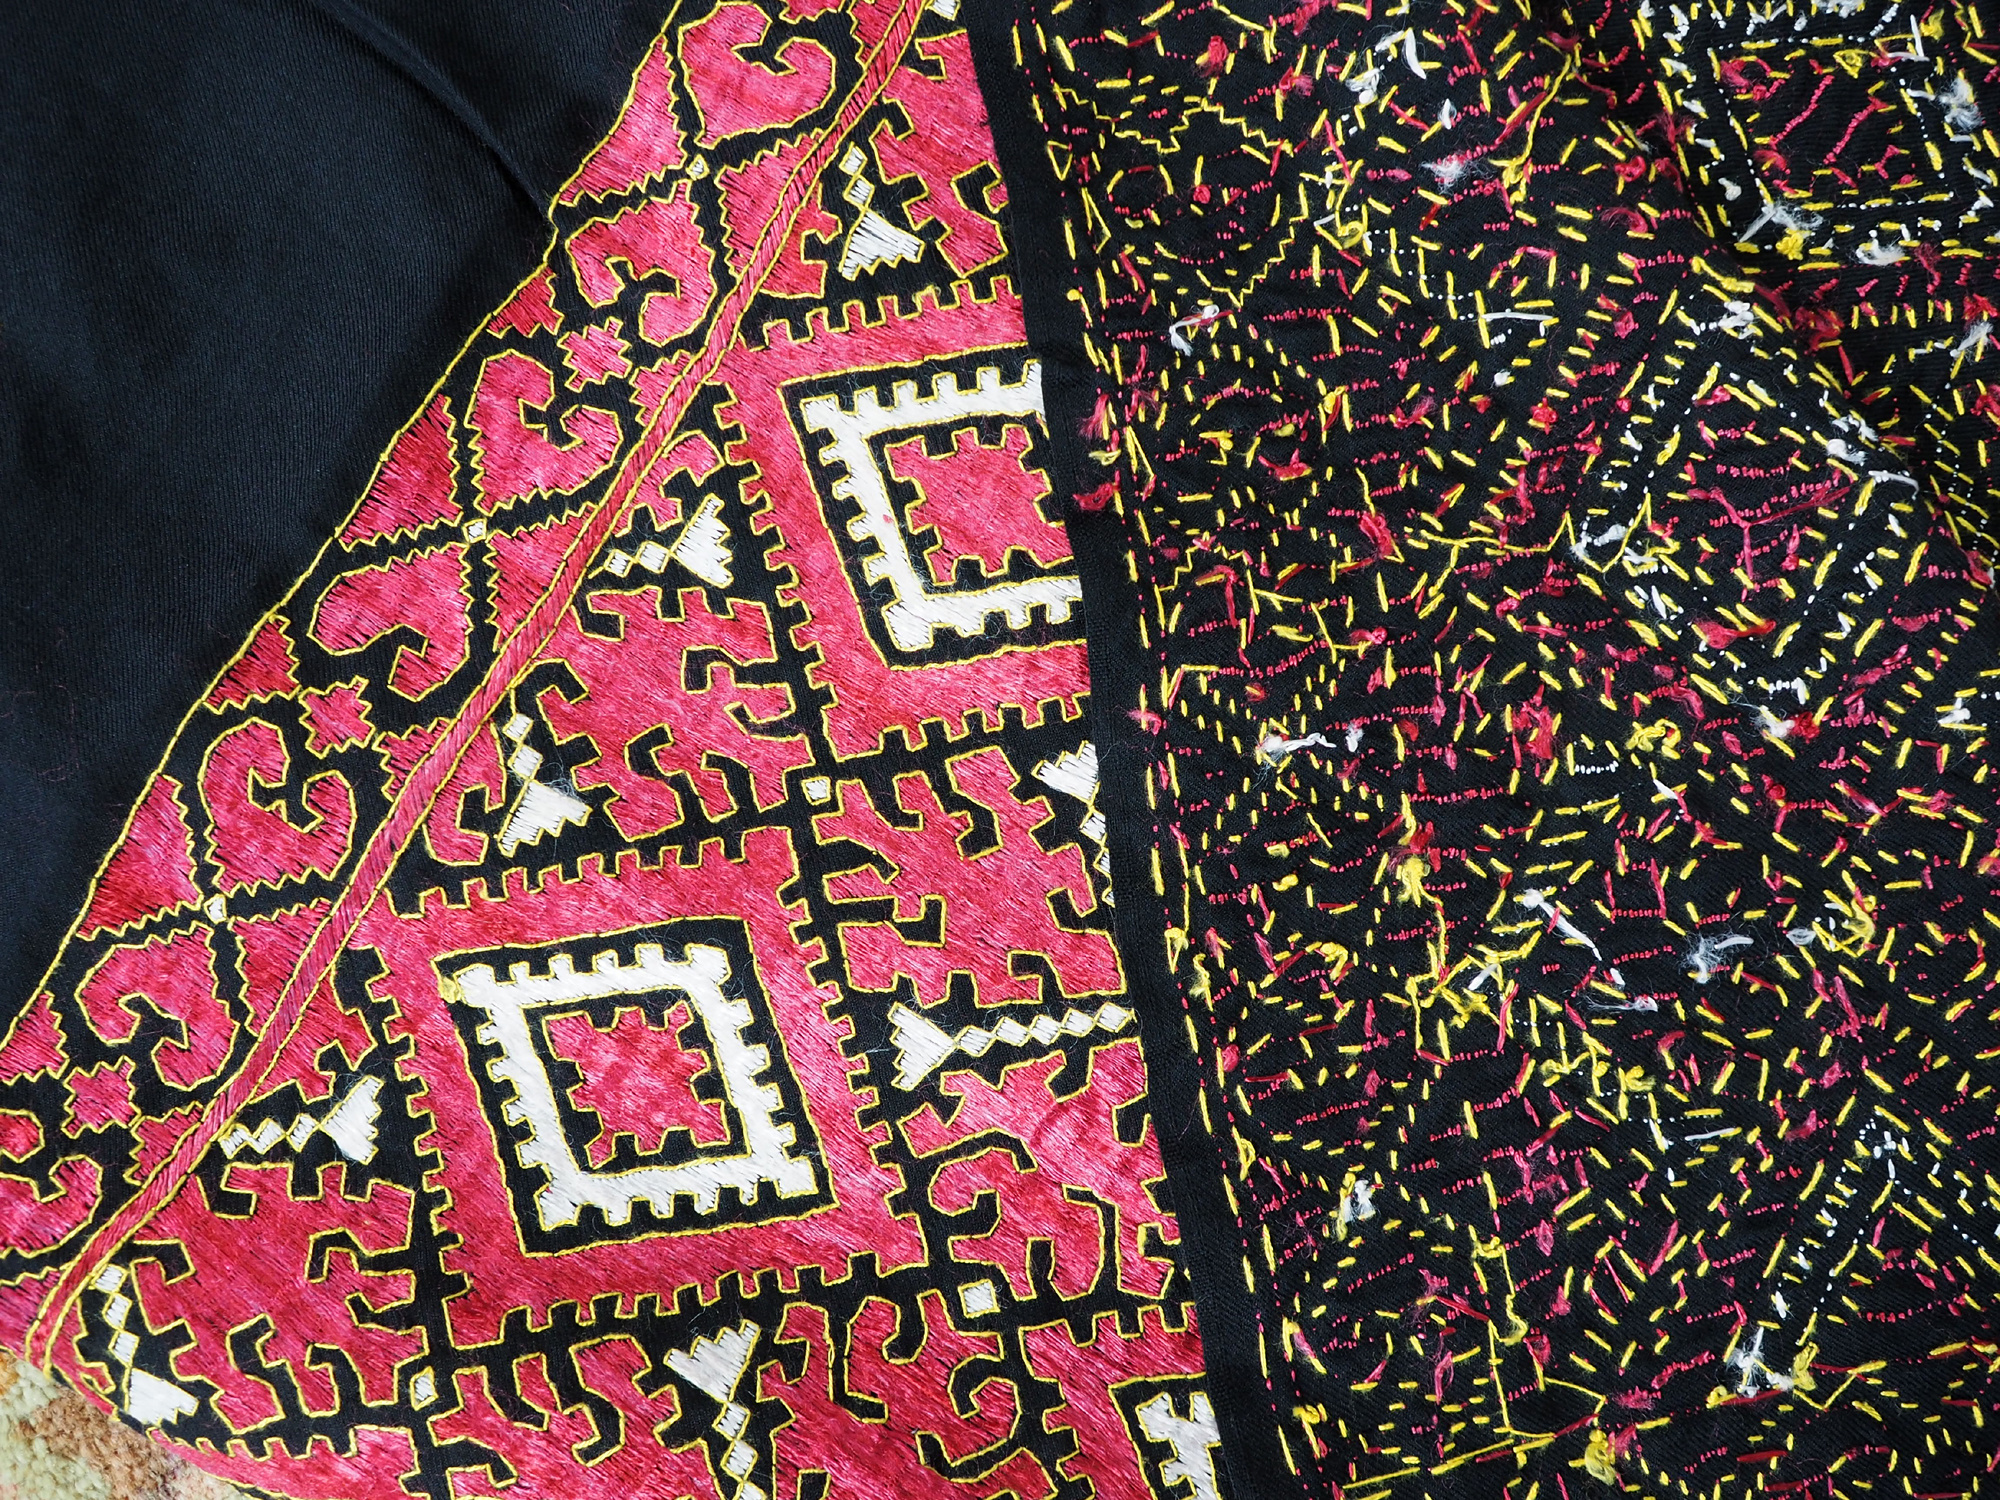 225x105 cm silk embroidered Pulkari  scarf, shawl, muffler Swat Valley 20/A